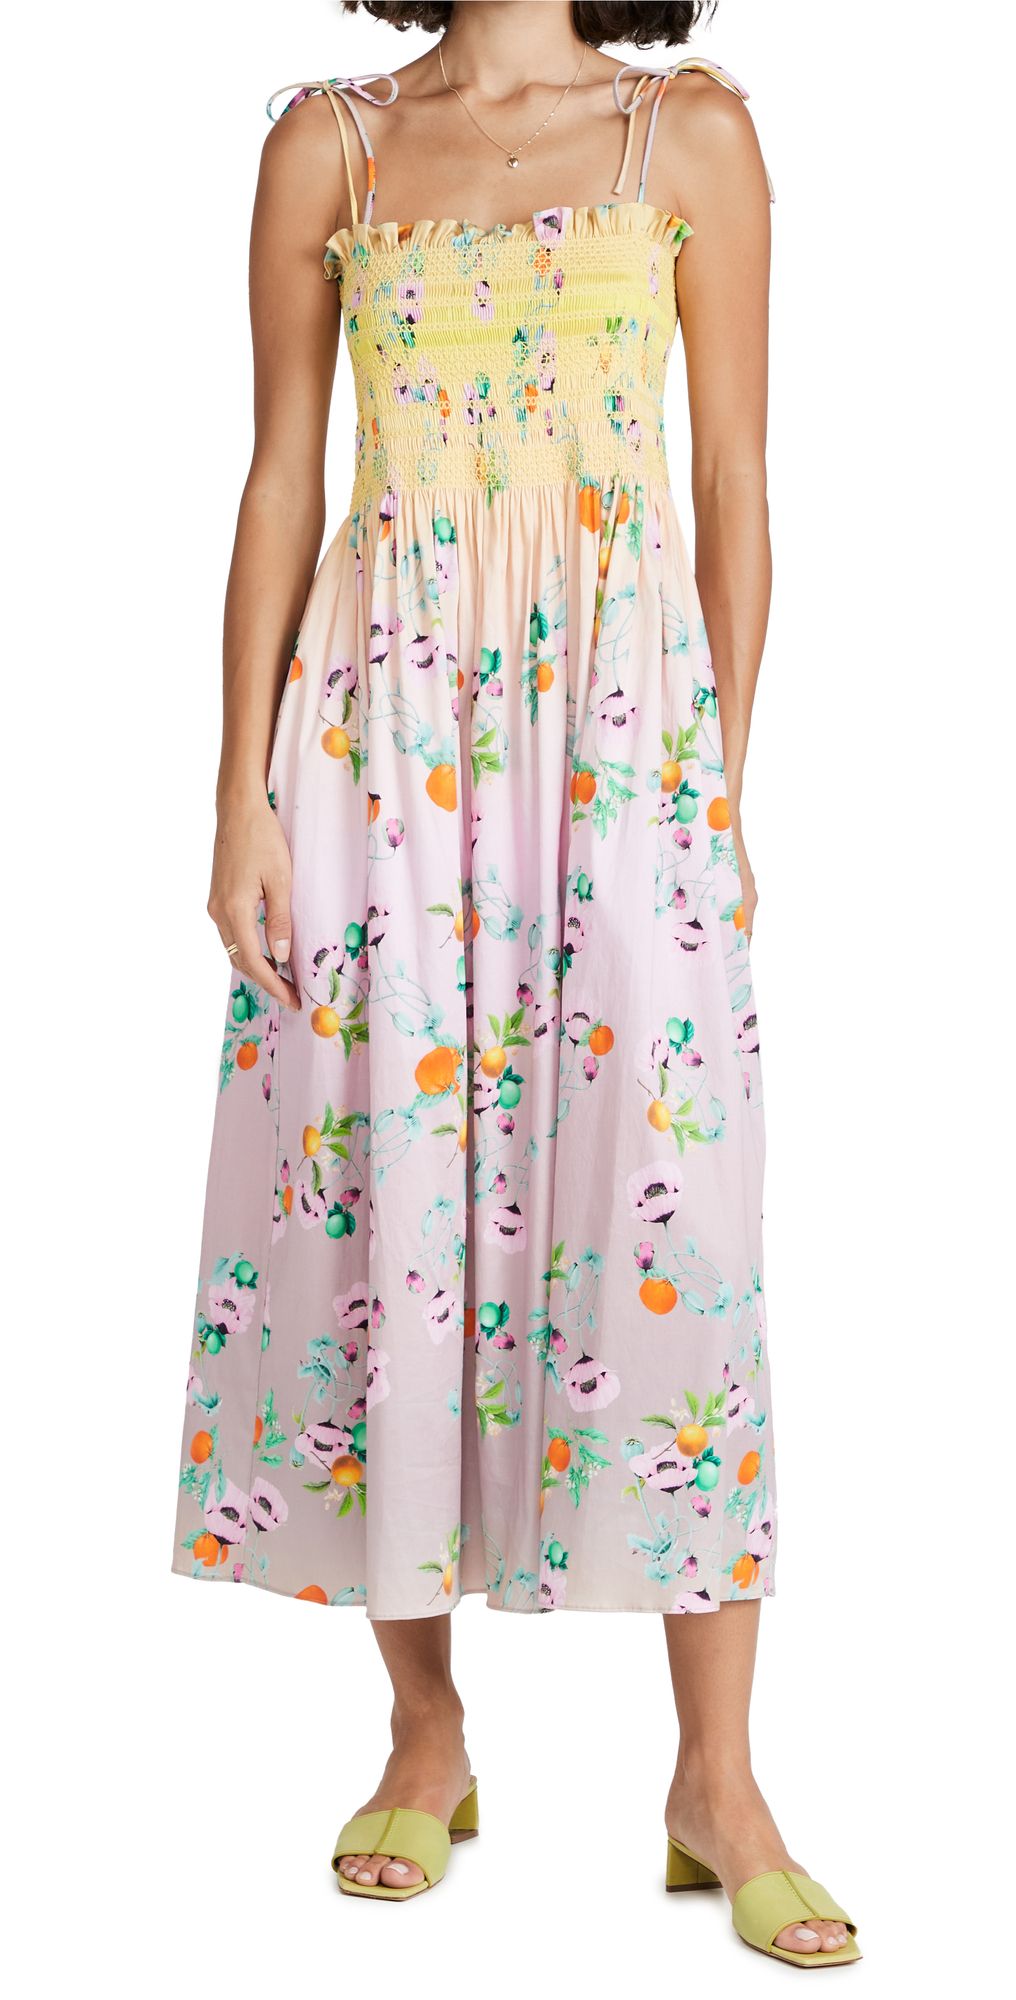 Cynthia Rowley Ombre Floral Smocked Dress | Shopbop